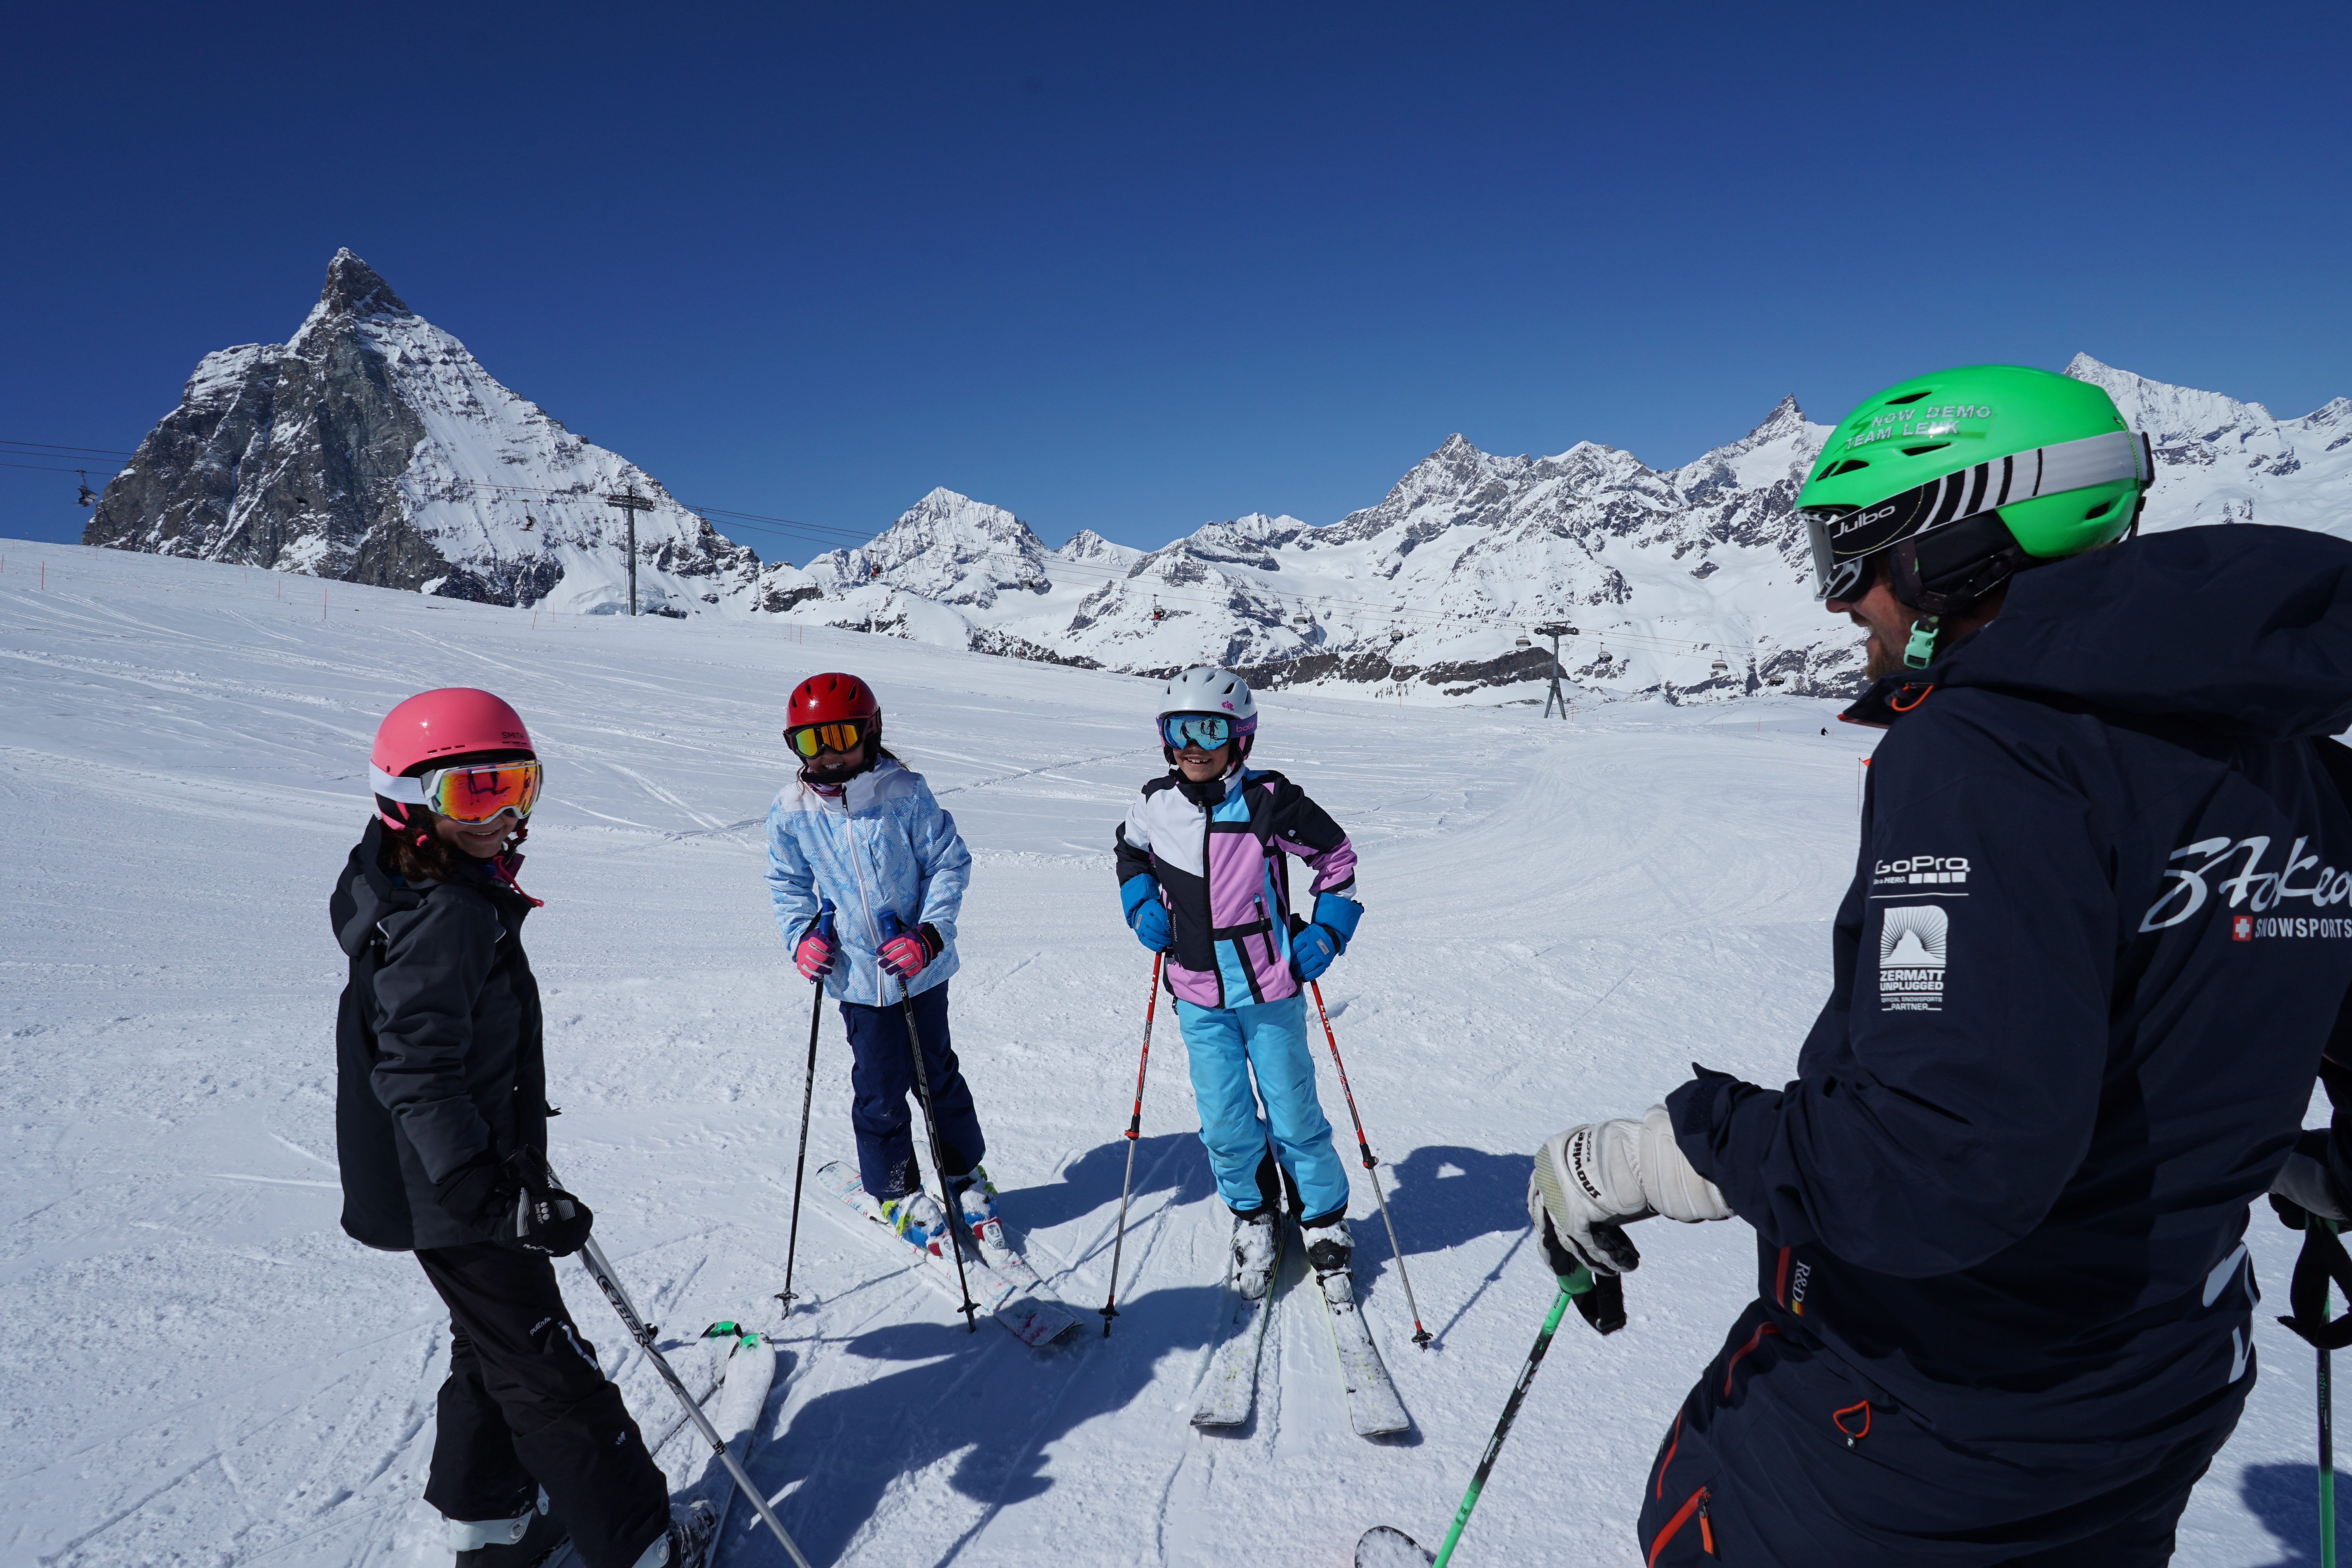 kids ski lessons with professional instructor, Zermatt